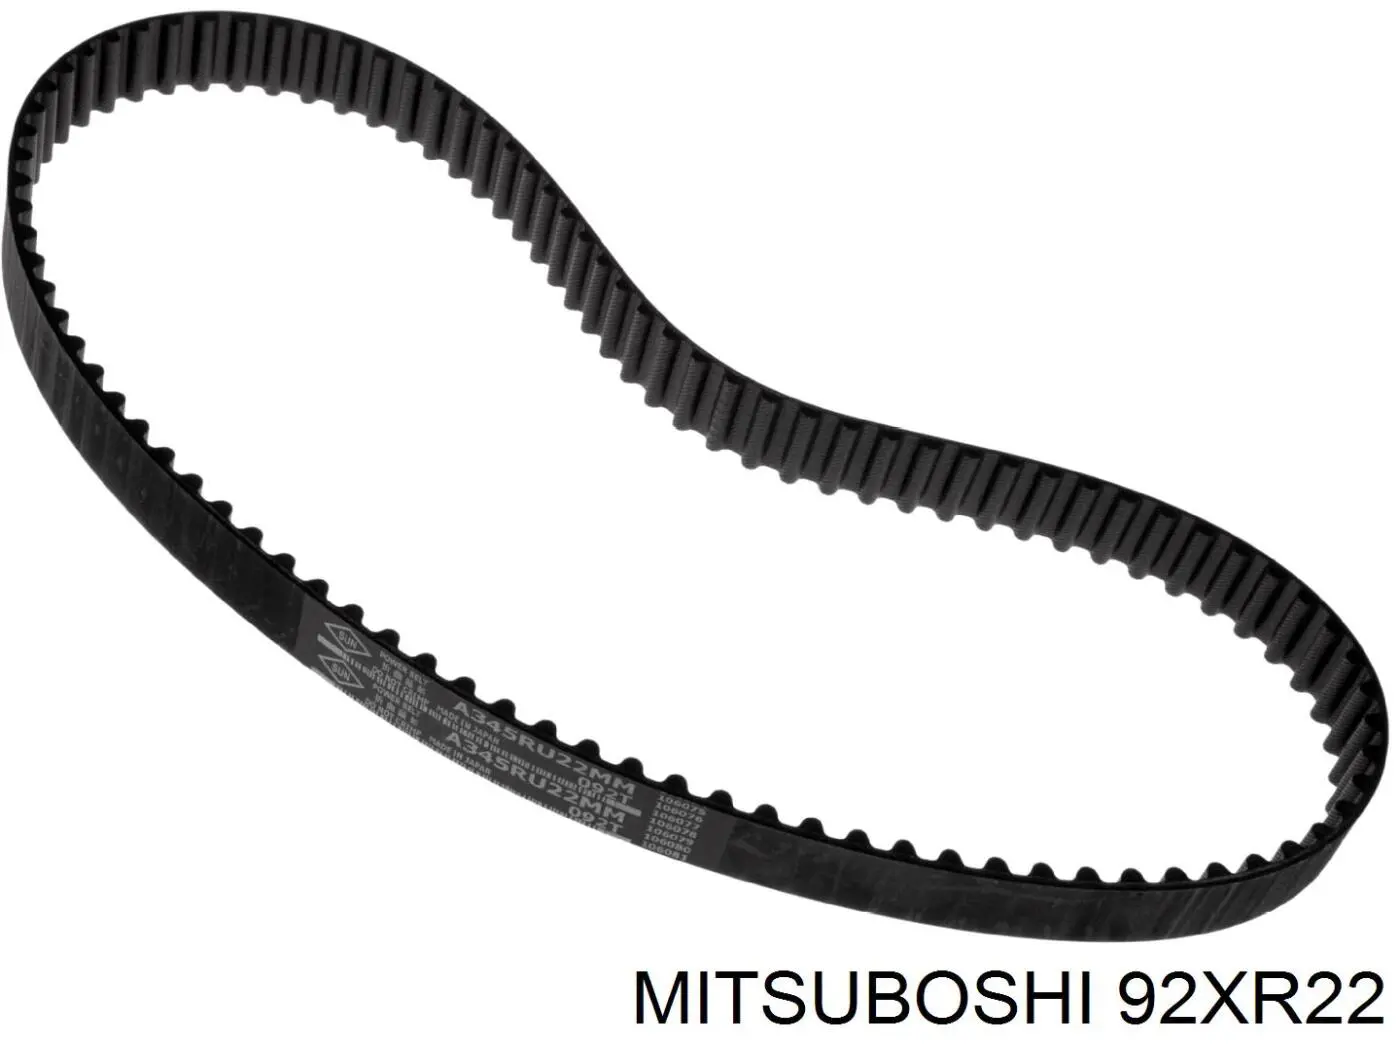 92XR22 Mitsuboshi correa distribucion